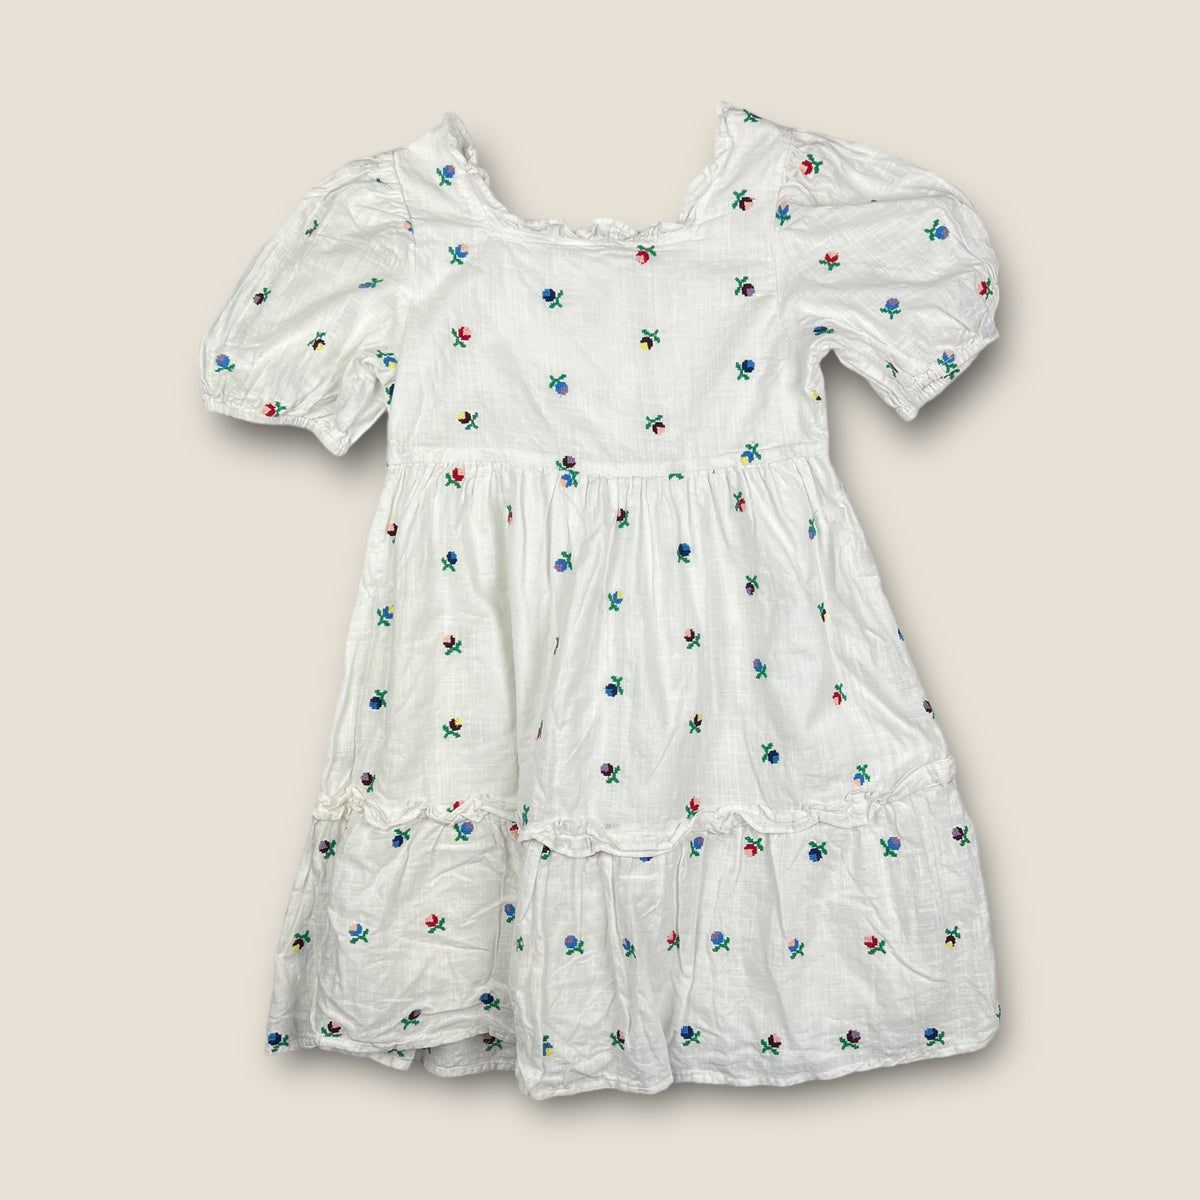 Zara White Embroidered Dress size 11-12